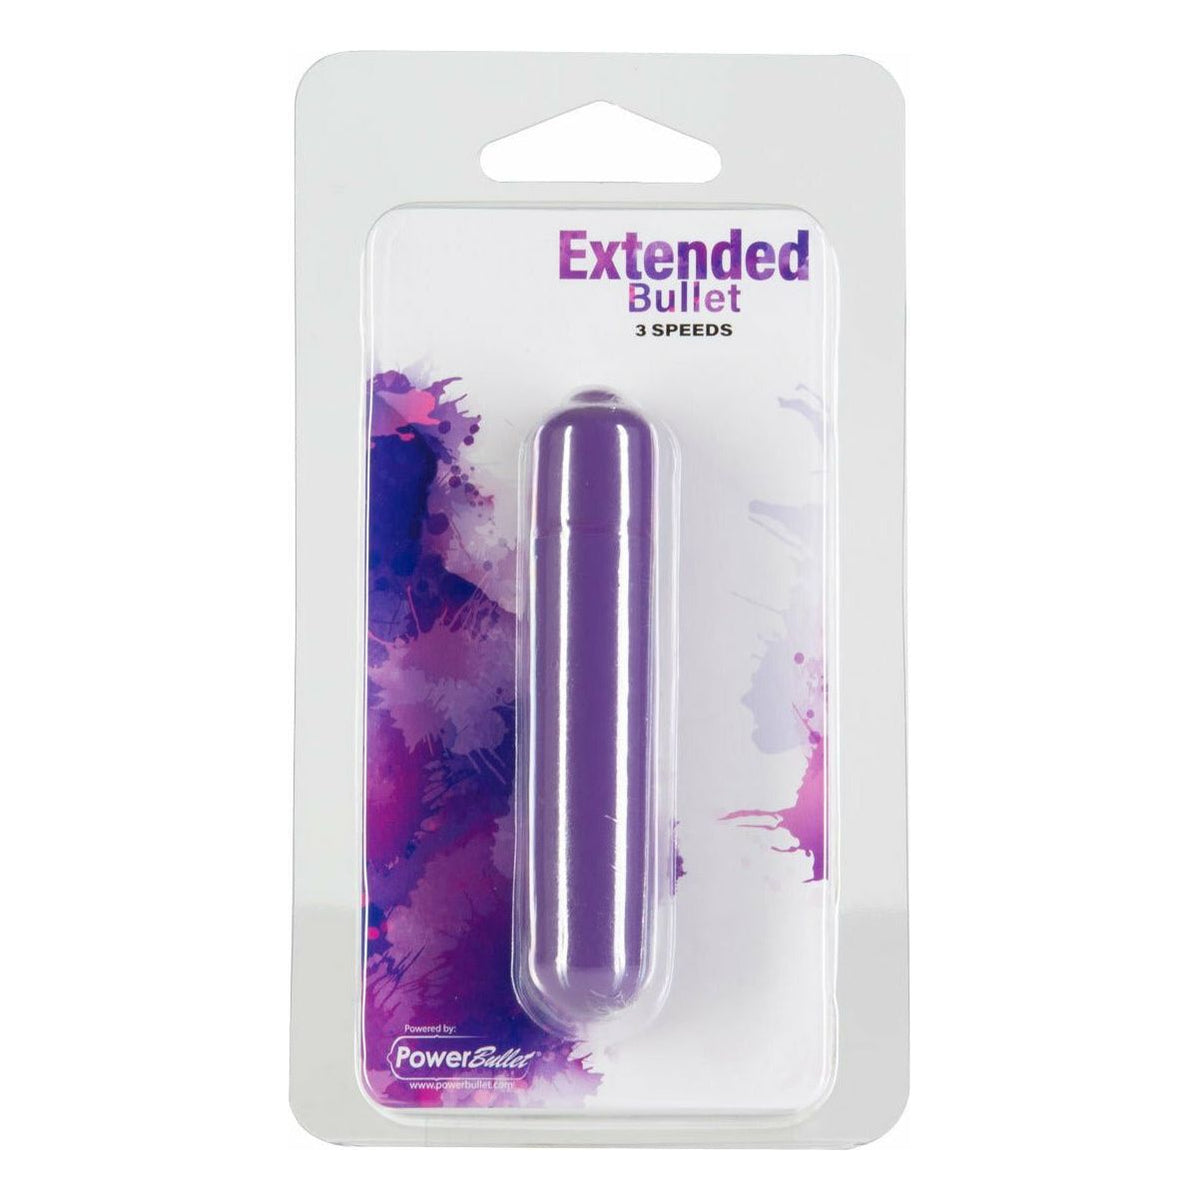 PowerBullet Extended Bullet 3-Speed 3.5 Inch - Purple